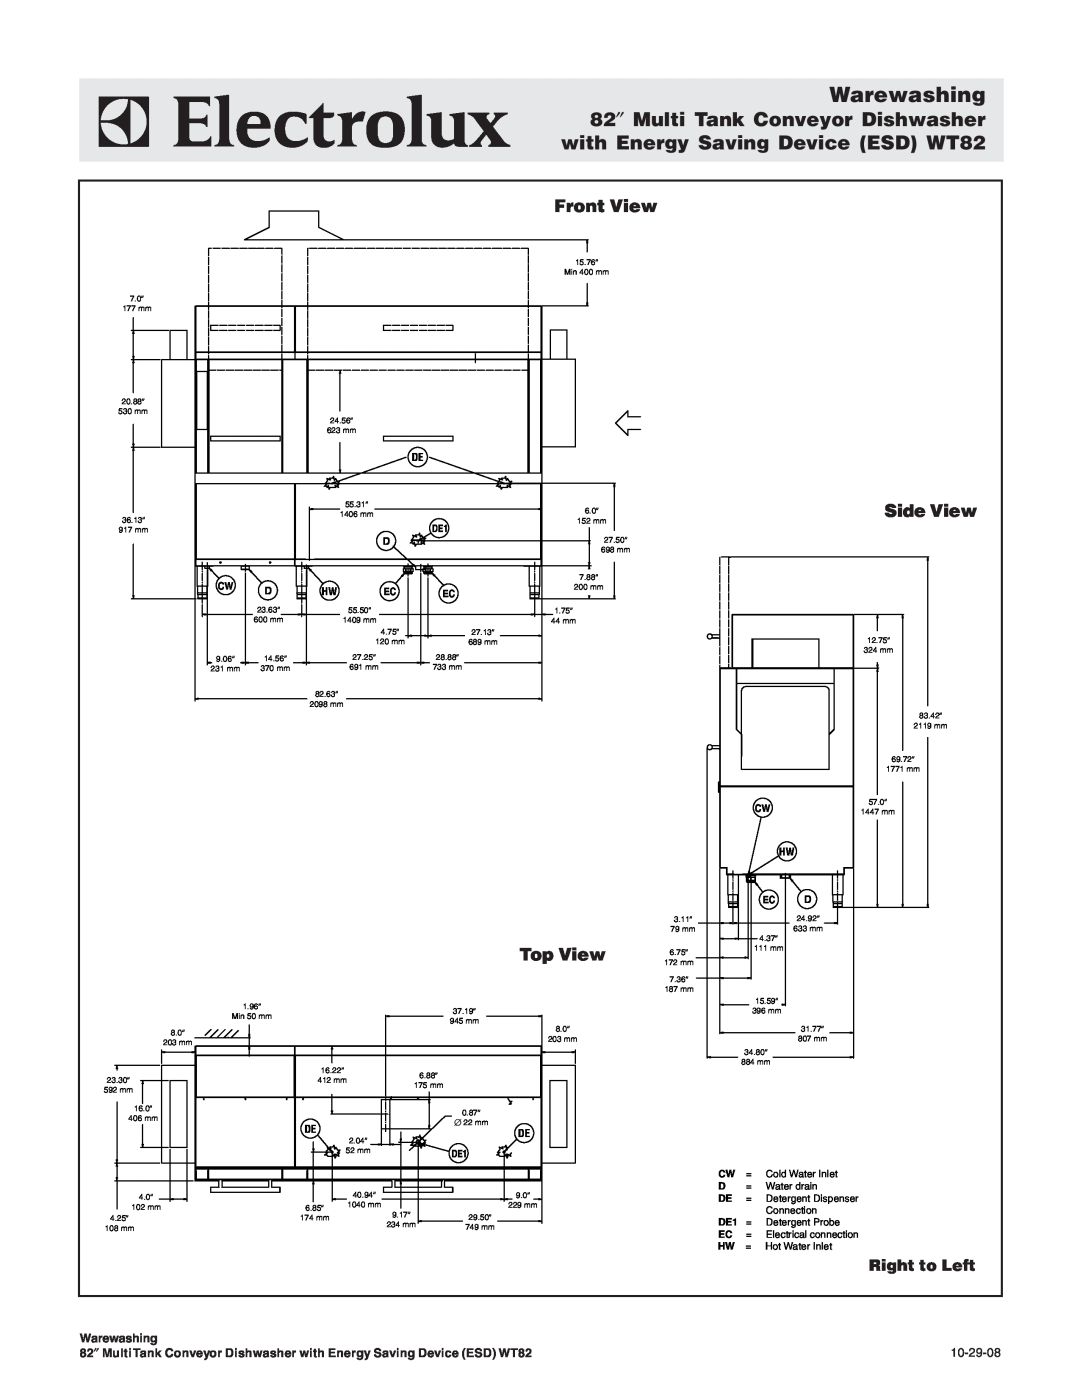 Electrolux 534175 Warewashing, 82″ Multi Tank Conveyor Dishwasher with Energy Saving Device ESD WT82, Front View, Top View 